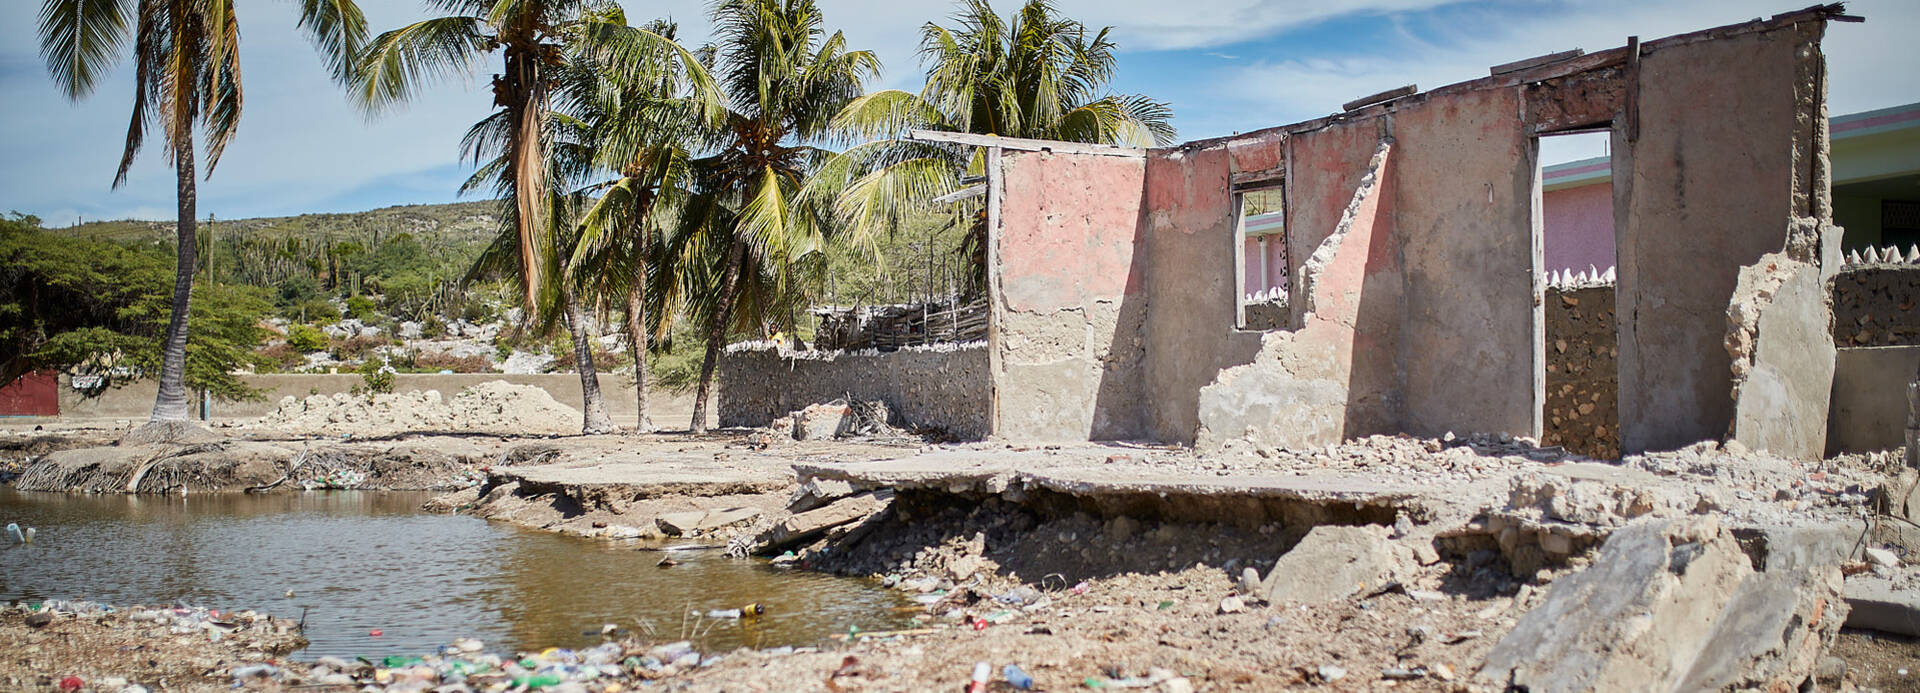 Situation nach Erdbeben in Haiti